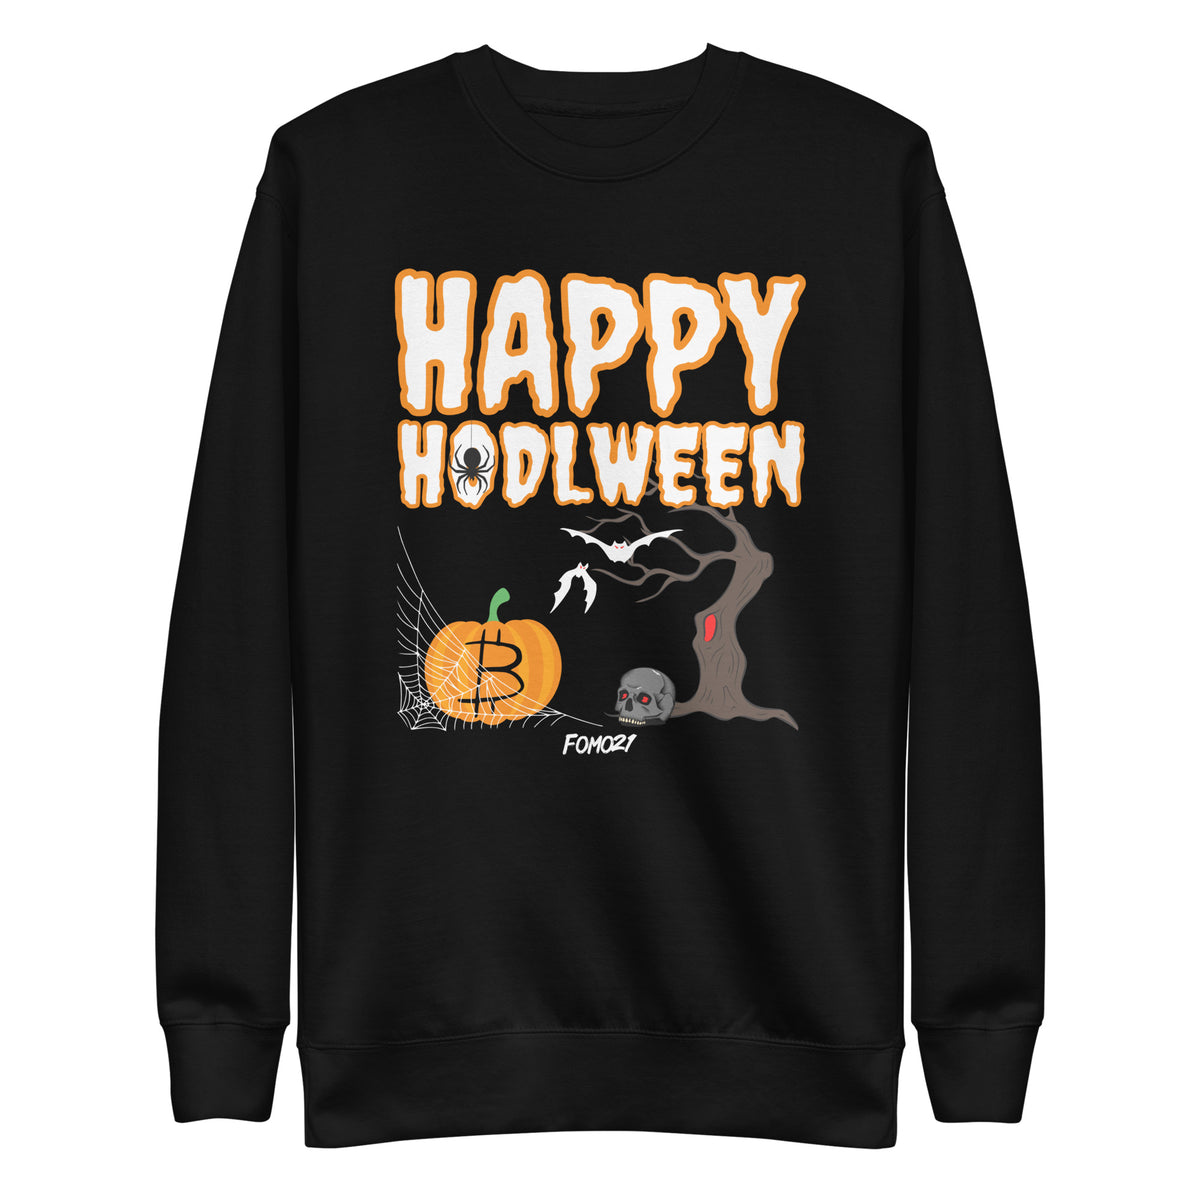 Happy HODLween Bitcoin Crewneck Sweatshirt - fomo21